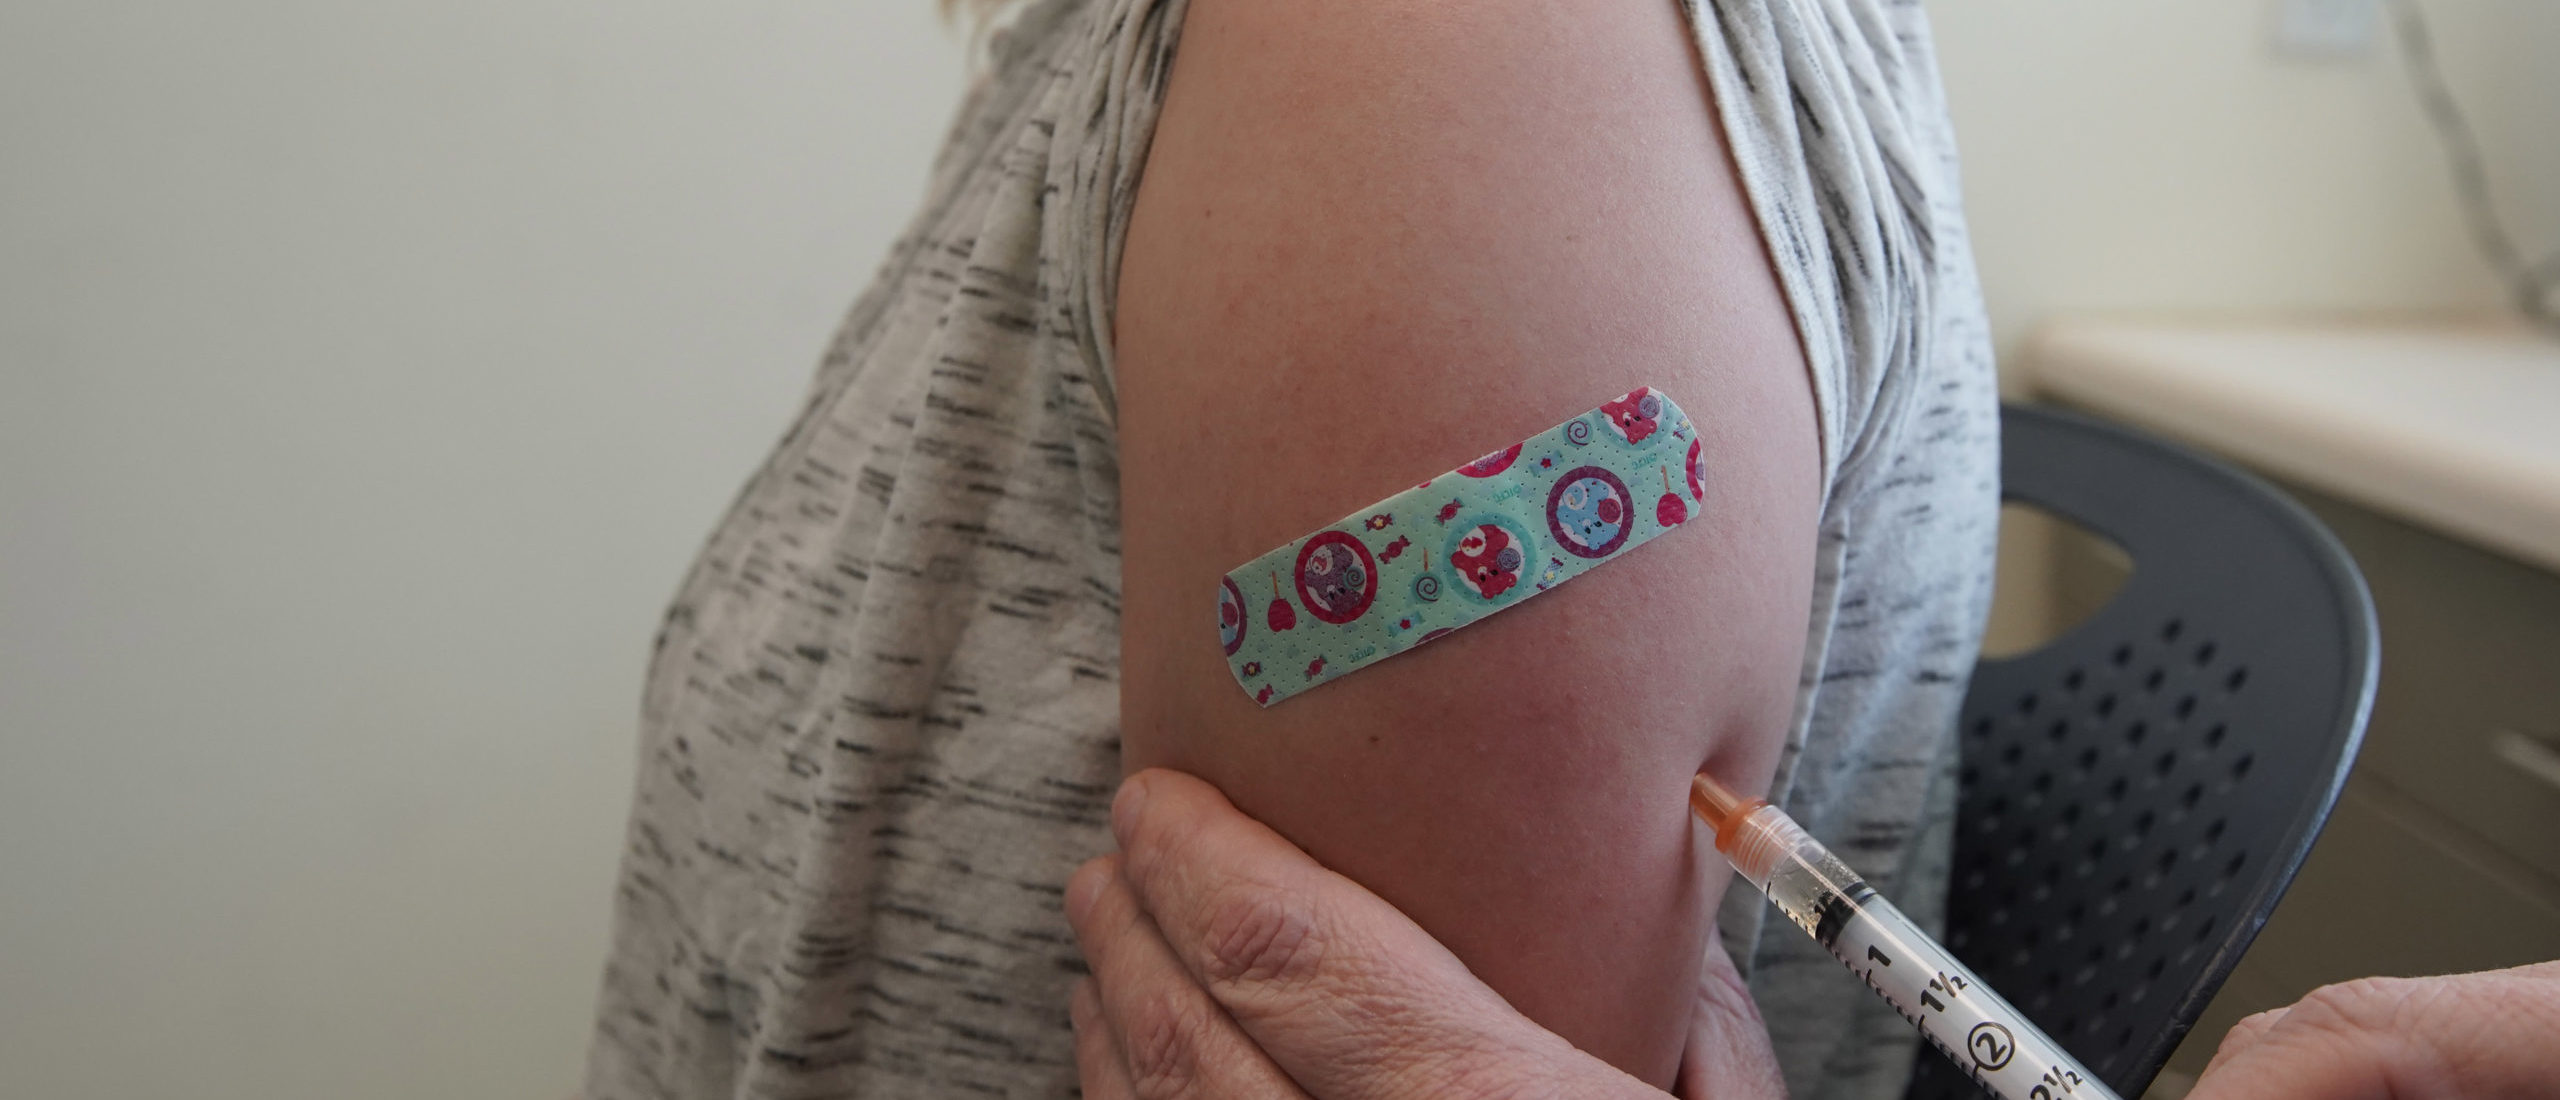 CDC Warns Measles Cases Increasing Across US